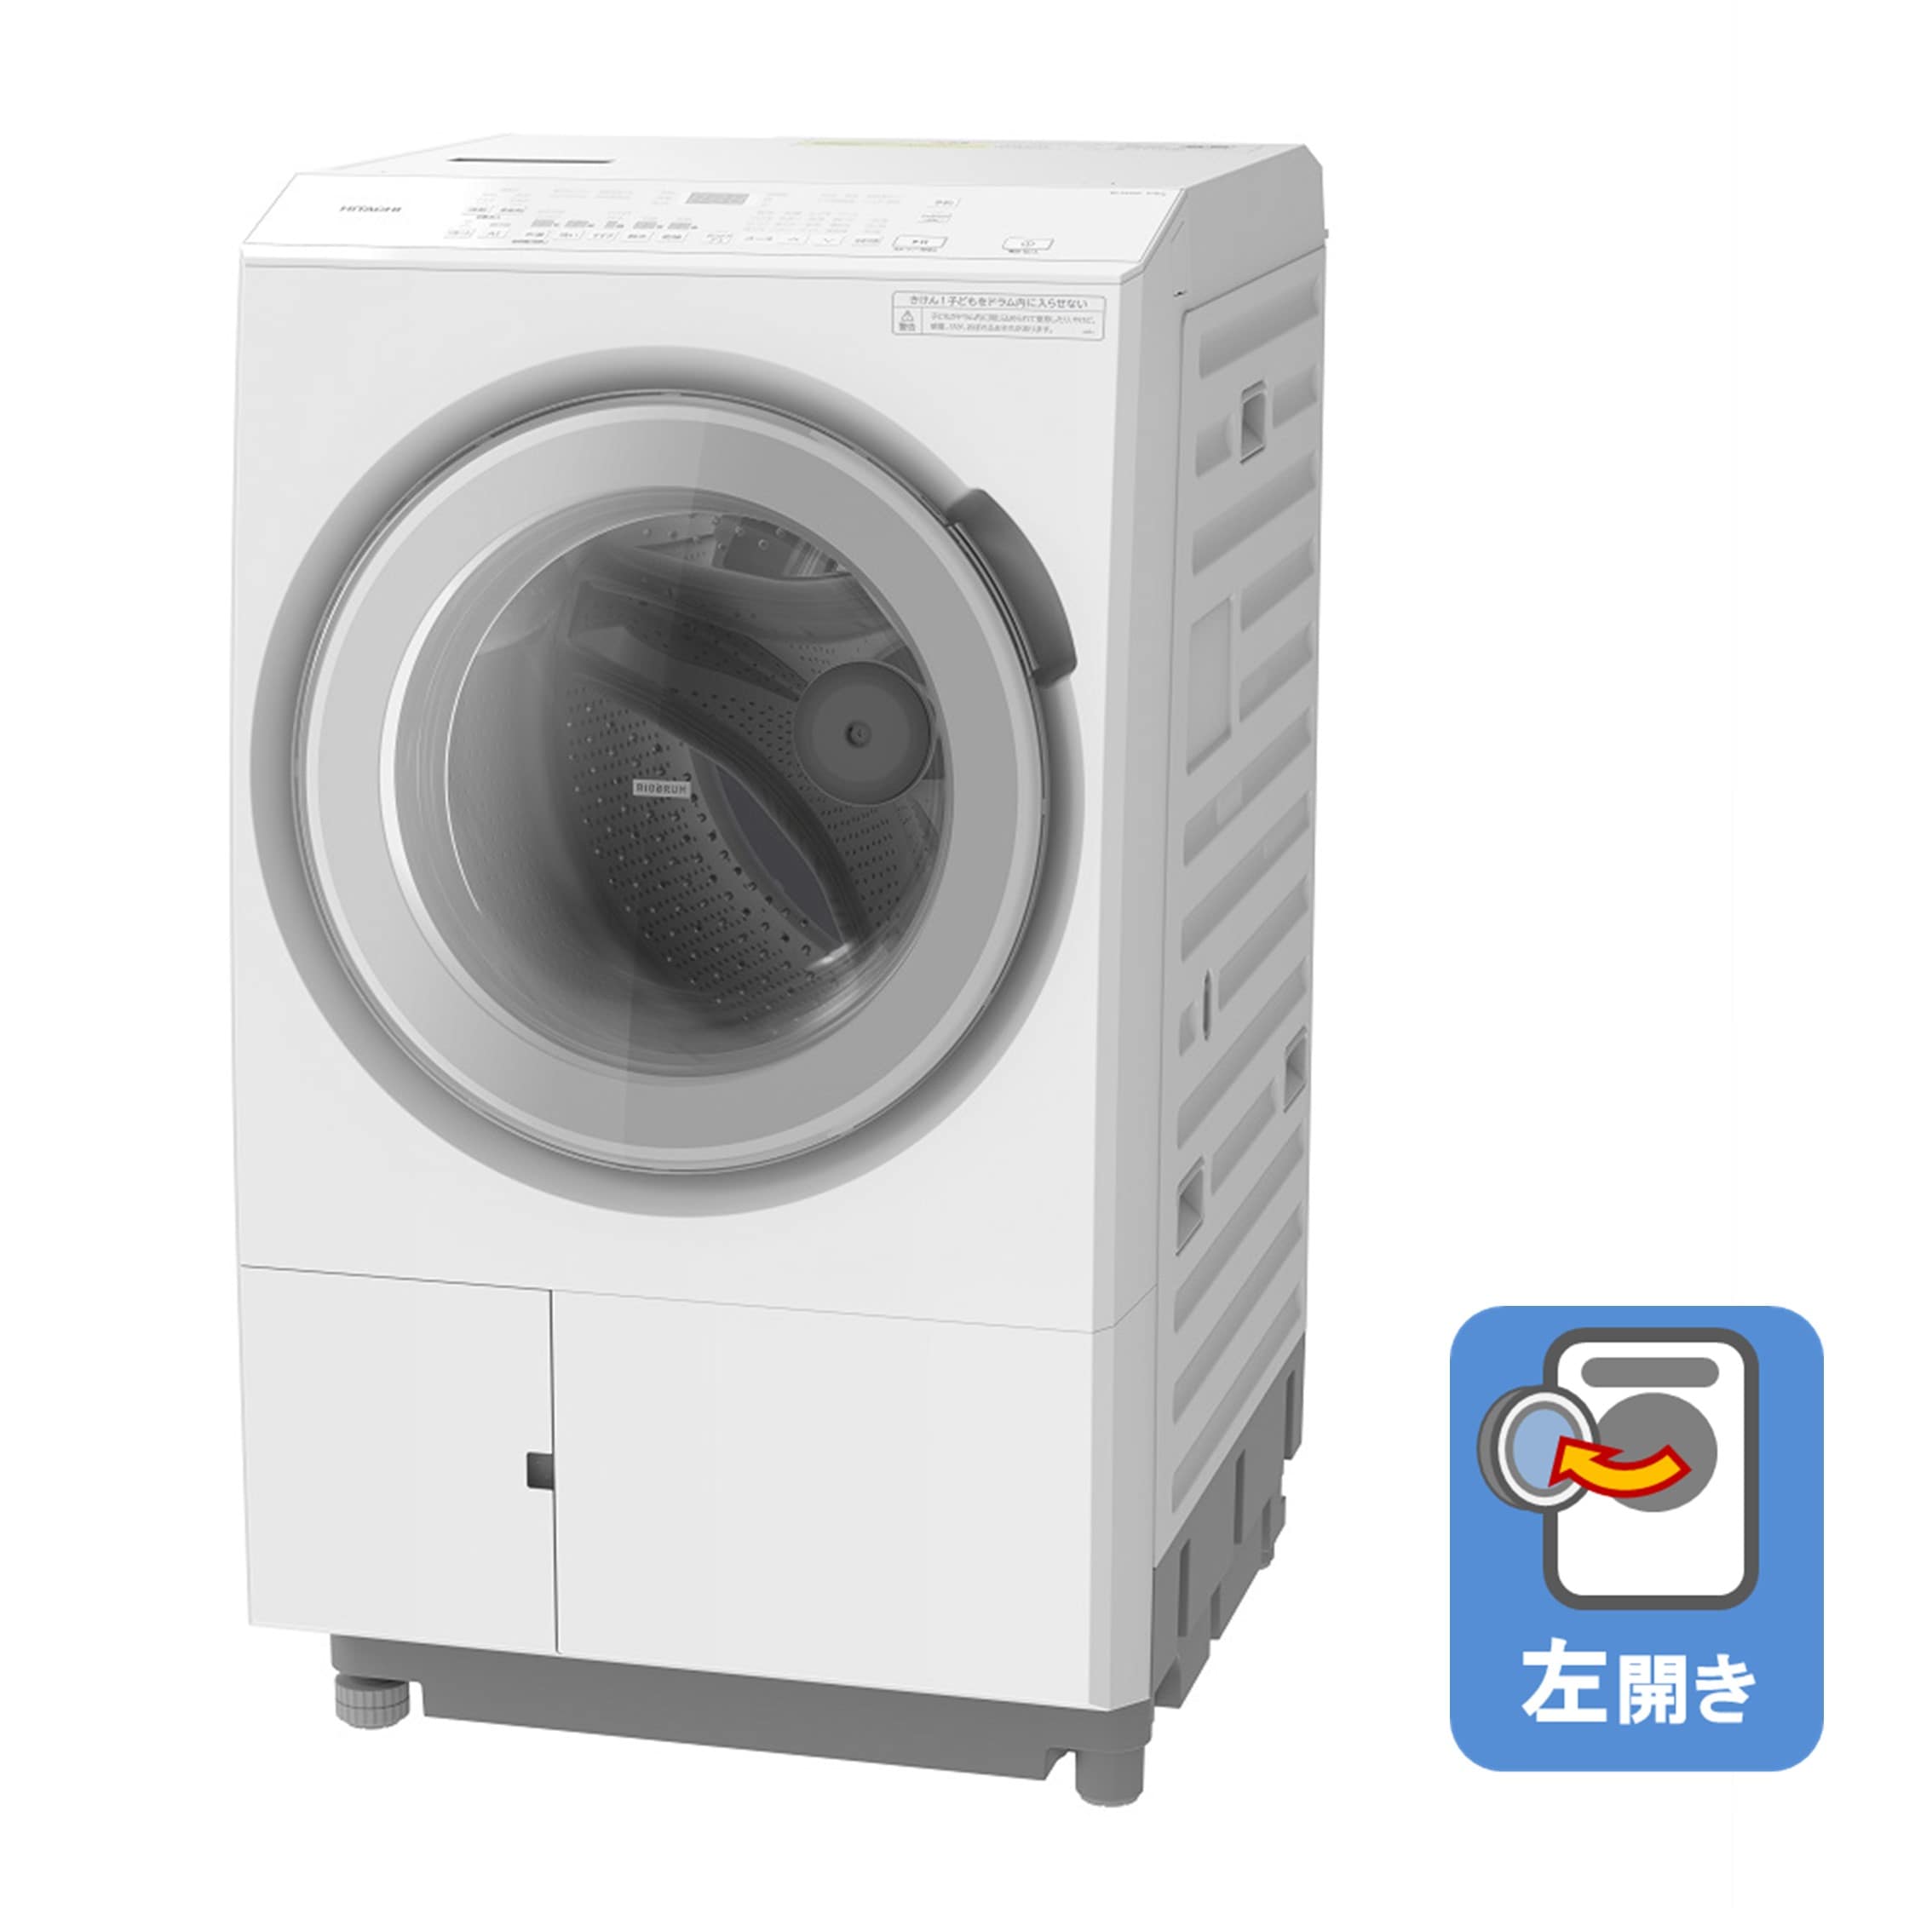 BW-V70Bたのめる便送料無料 HITACHI 洗濯機 7.0kg 0605や1 H 240